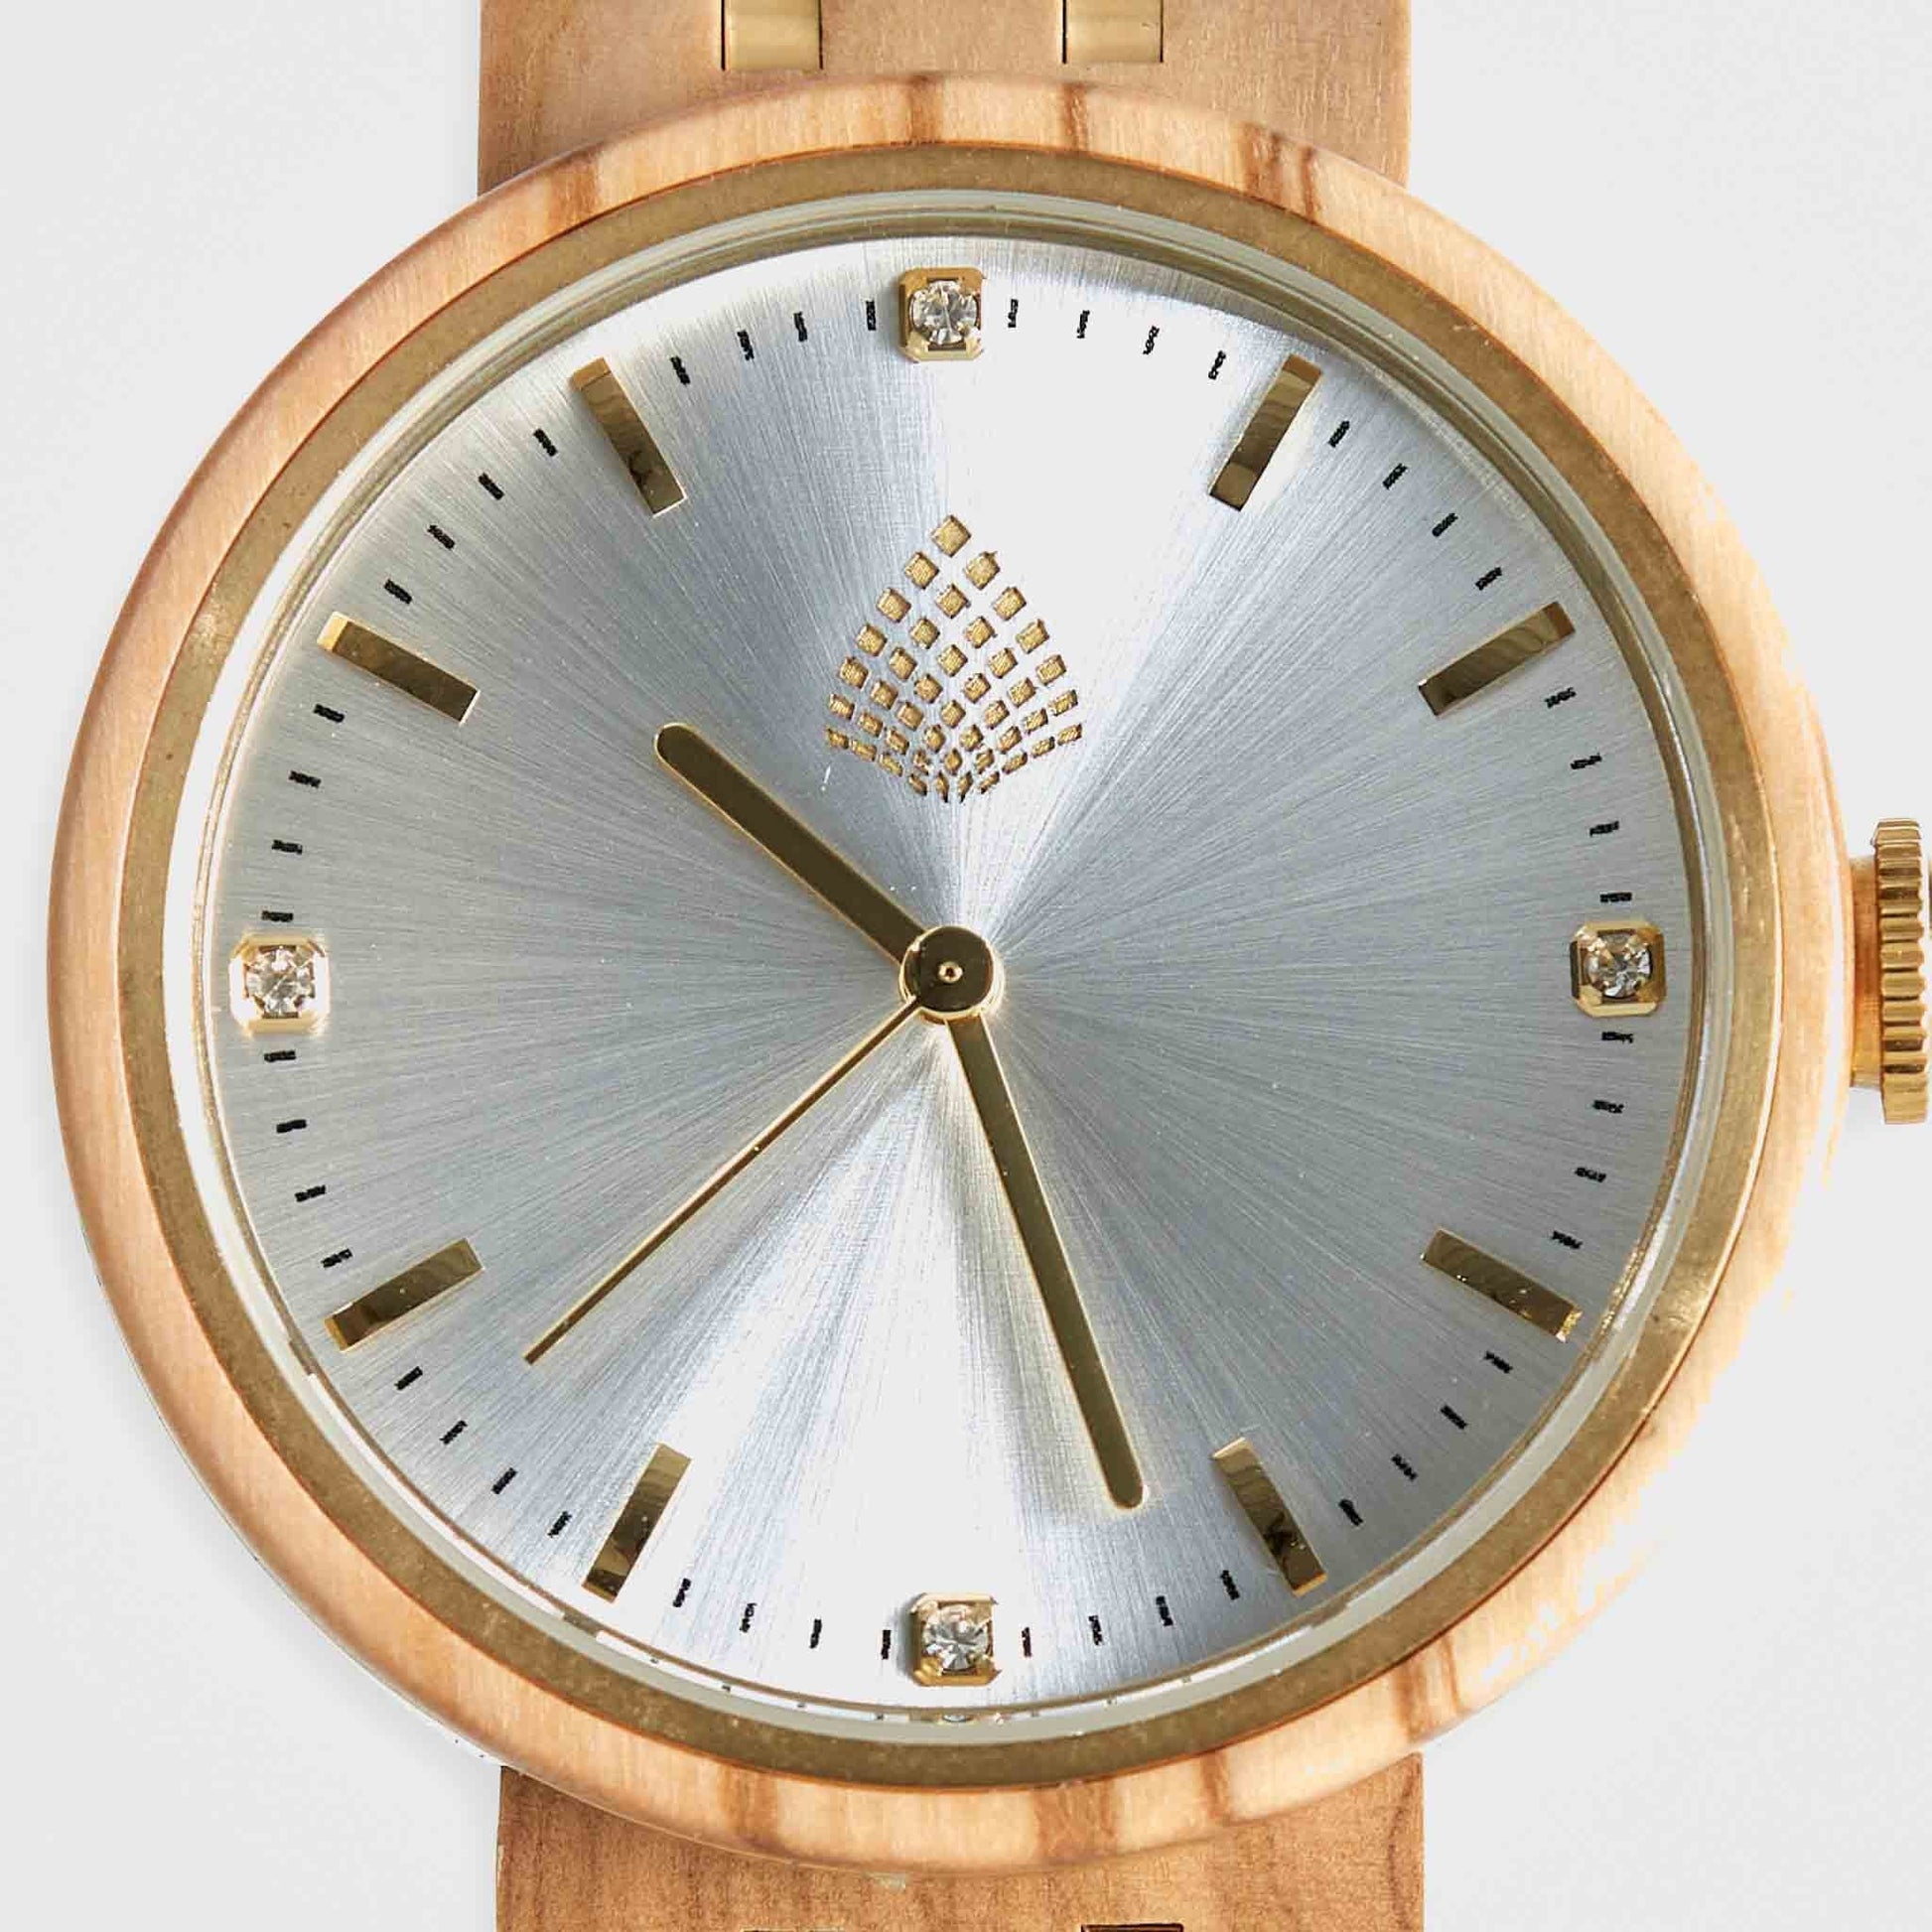 Handmade Casual Wristwatch For Men: The Teak